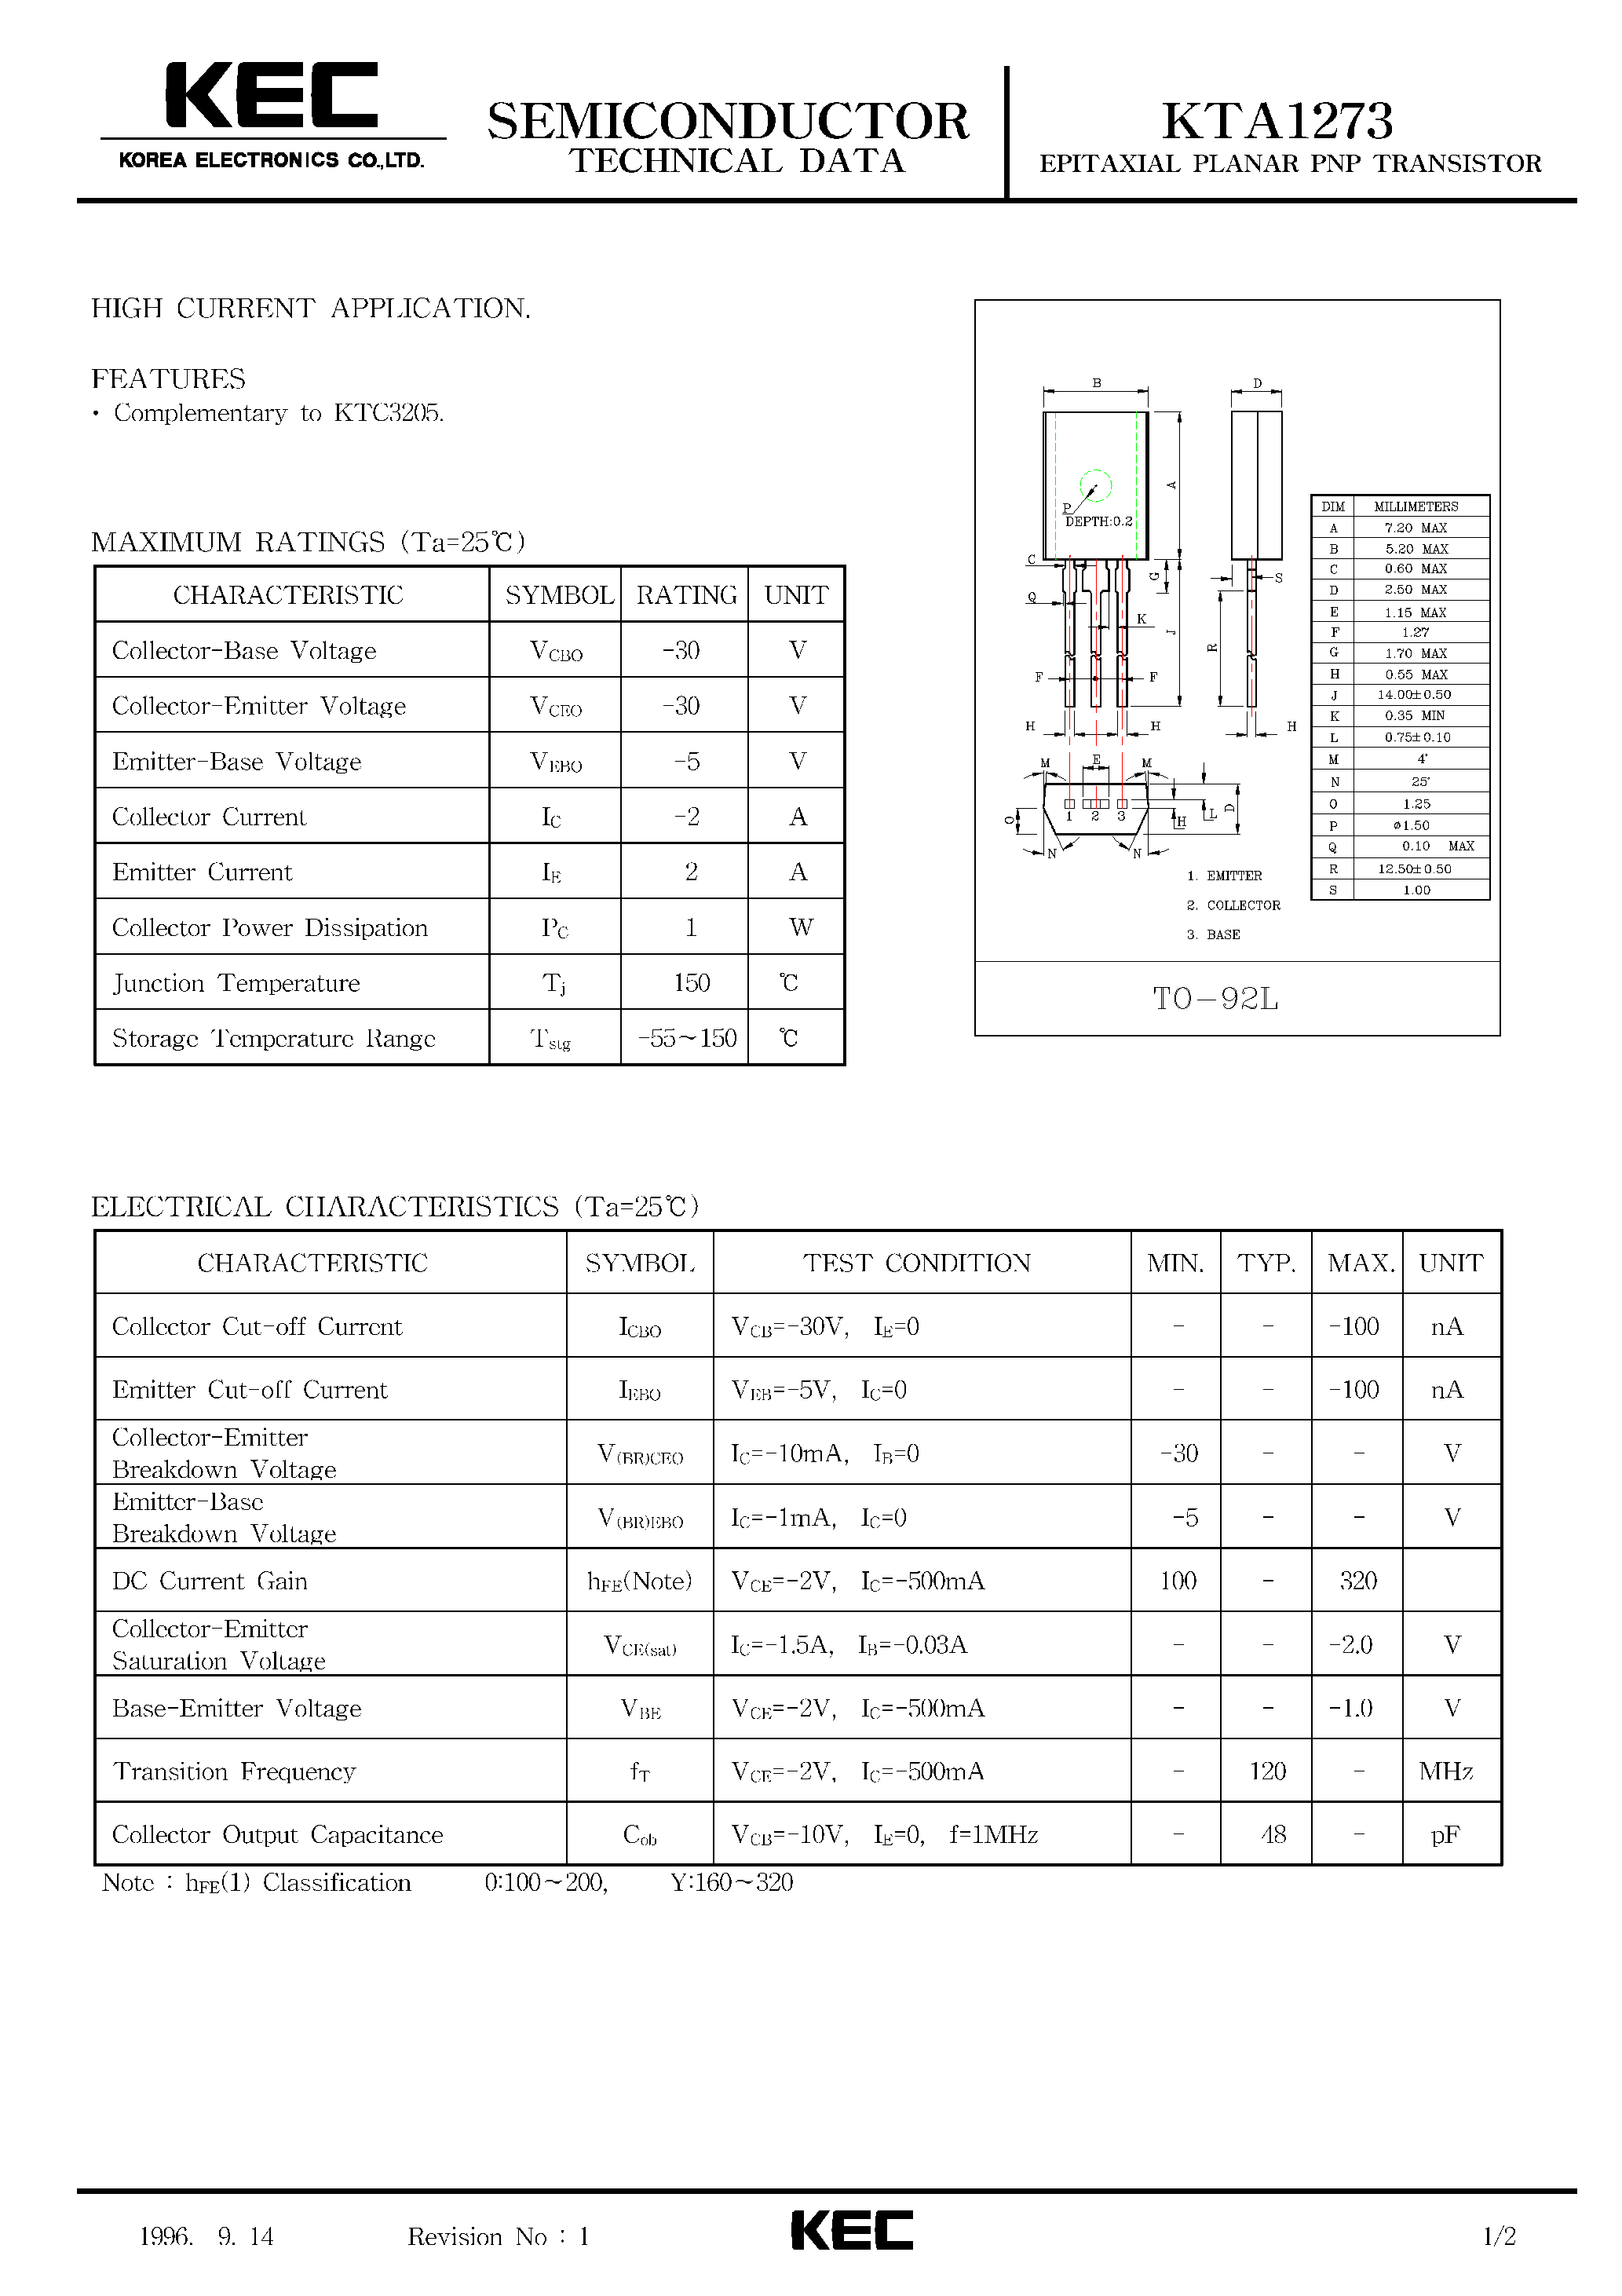 Datasheet KTA1273 - EPITAXIAL PLANAR PNP TRANSISTOR (HIGH CURRENT) page 1